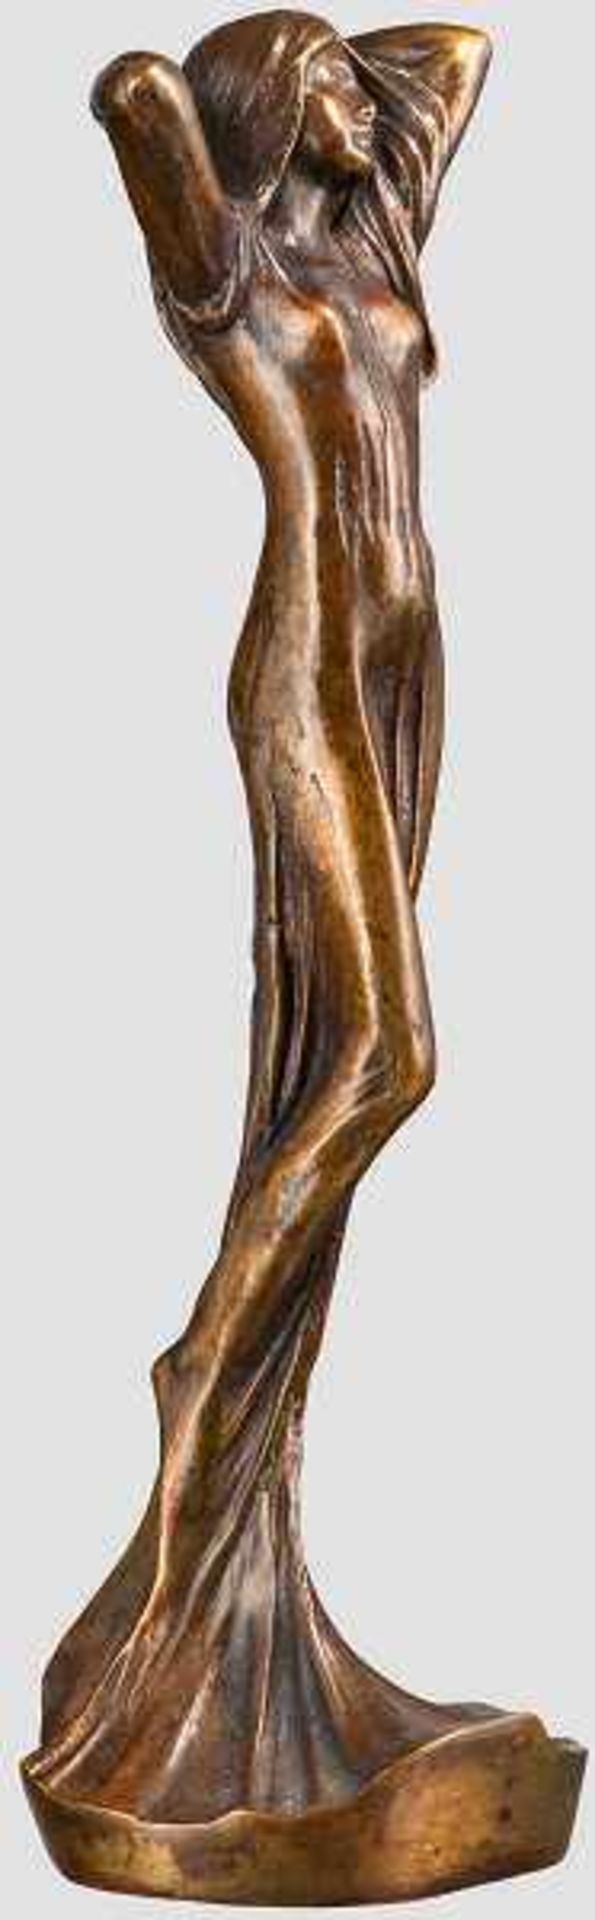 Jules Caussée (1891 - 1914) - Frauenfigur Art Nouveau Bronze. Stehende Frau in langem Gewand, die